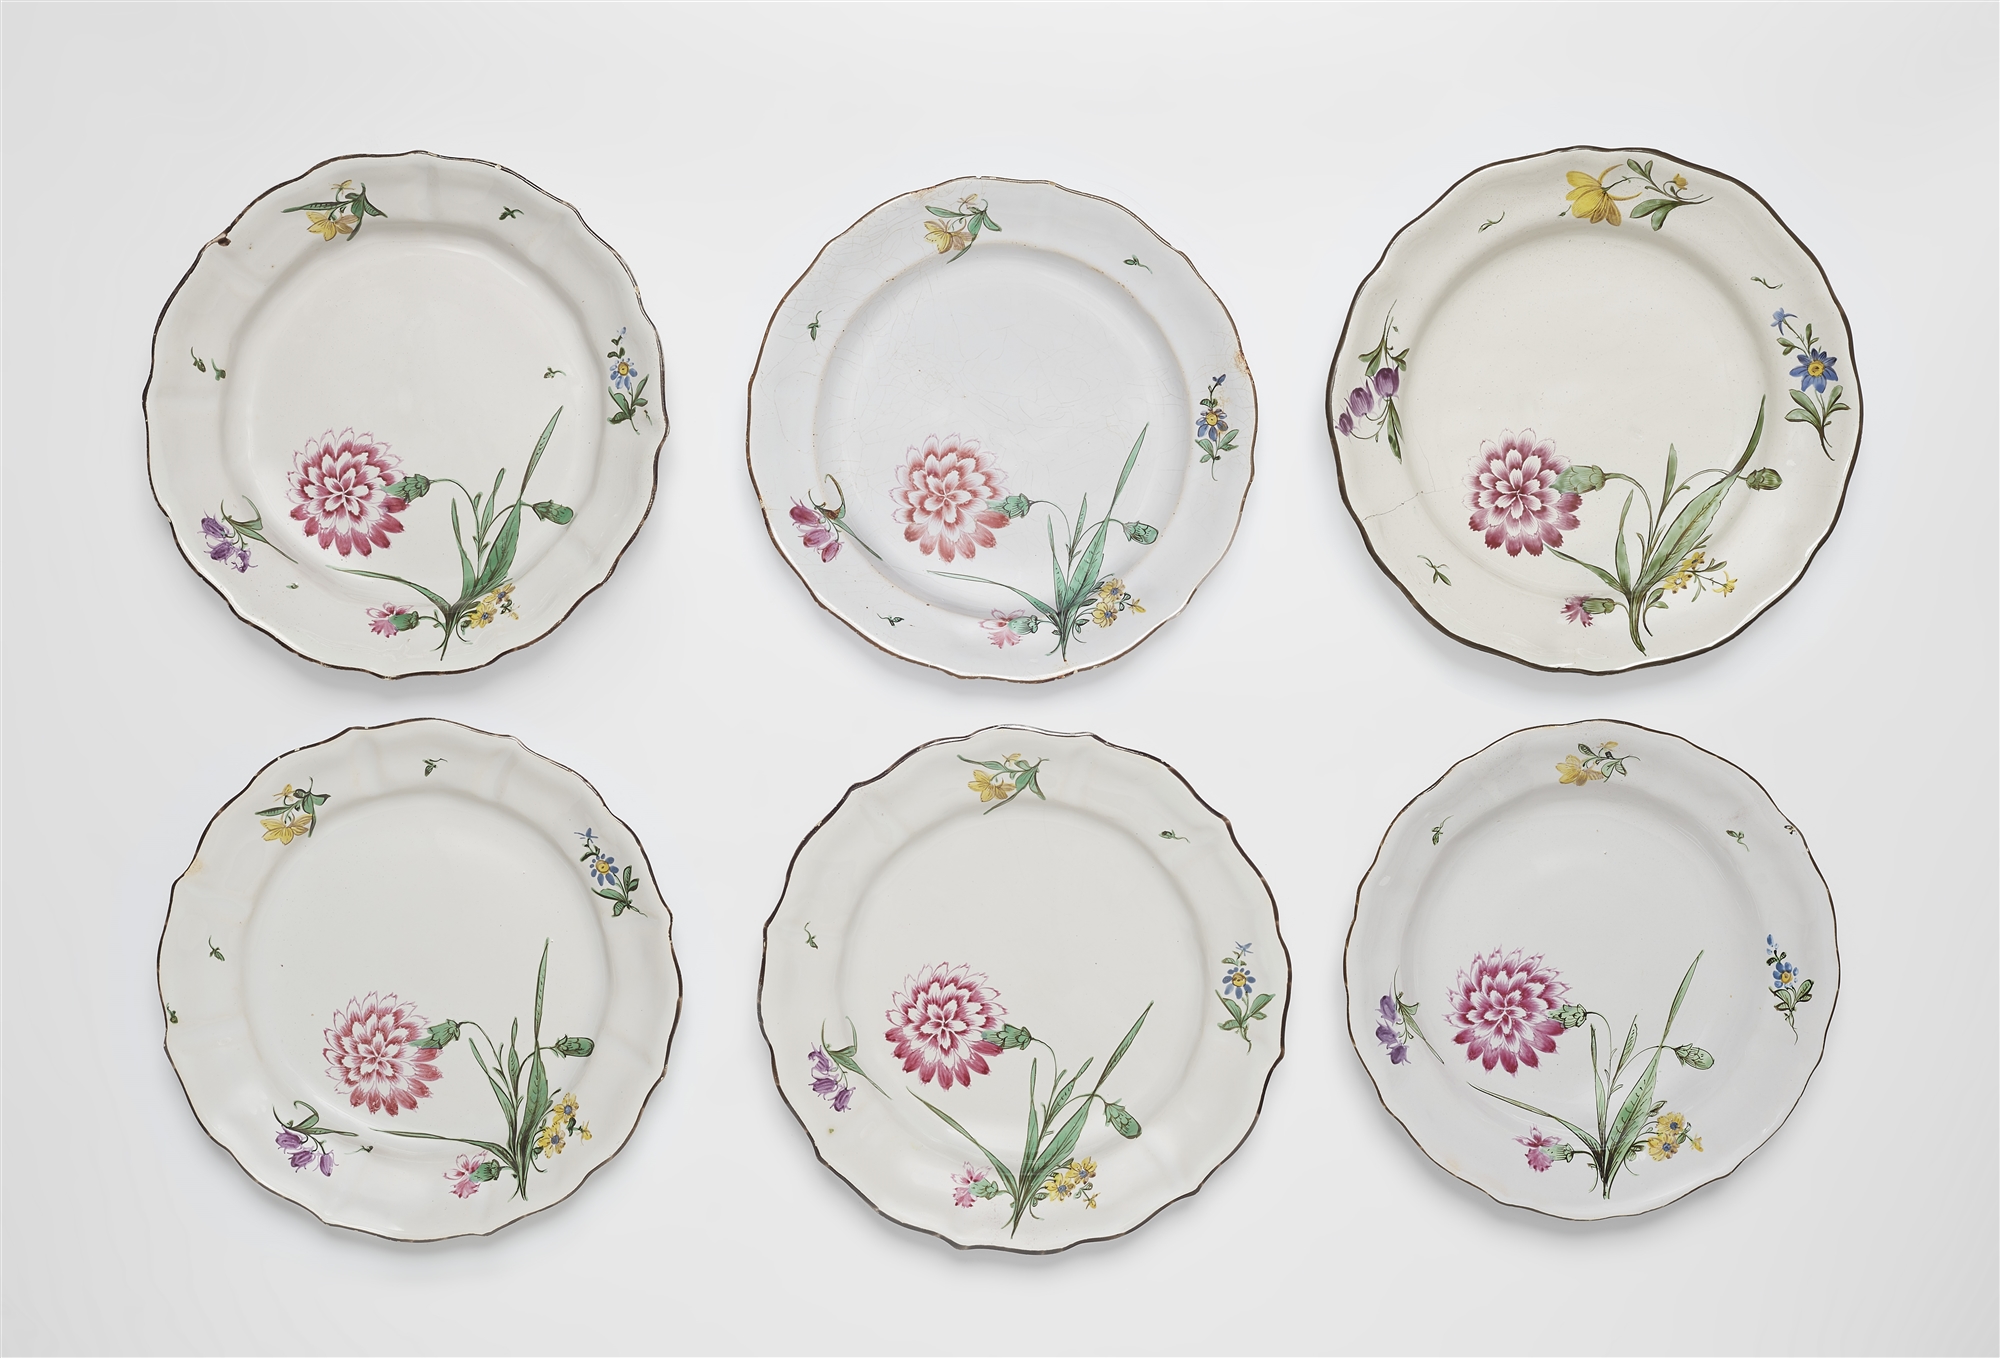 Six plates with carnation motifs